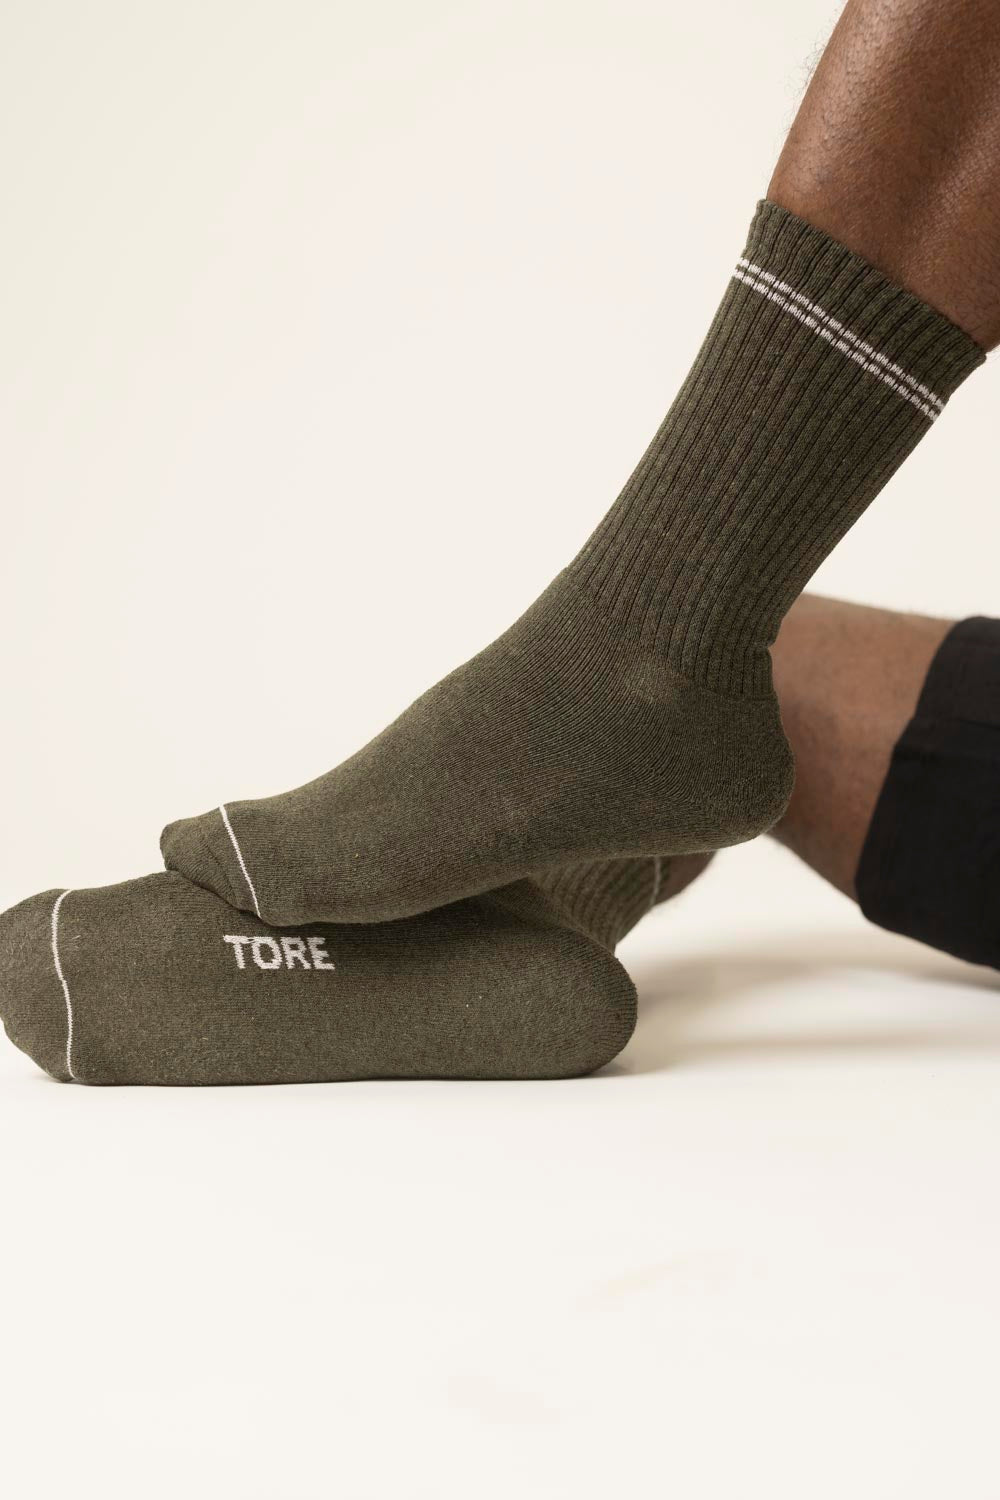 TORE 3PK 100% Recycled Cotton Striped Sports Crew Socks - Men's